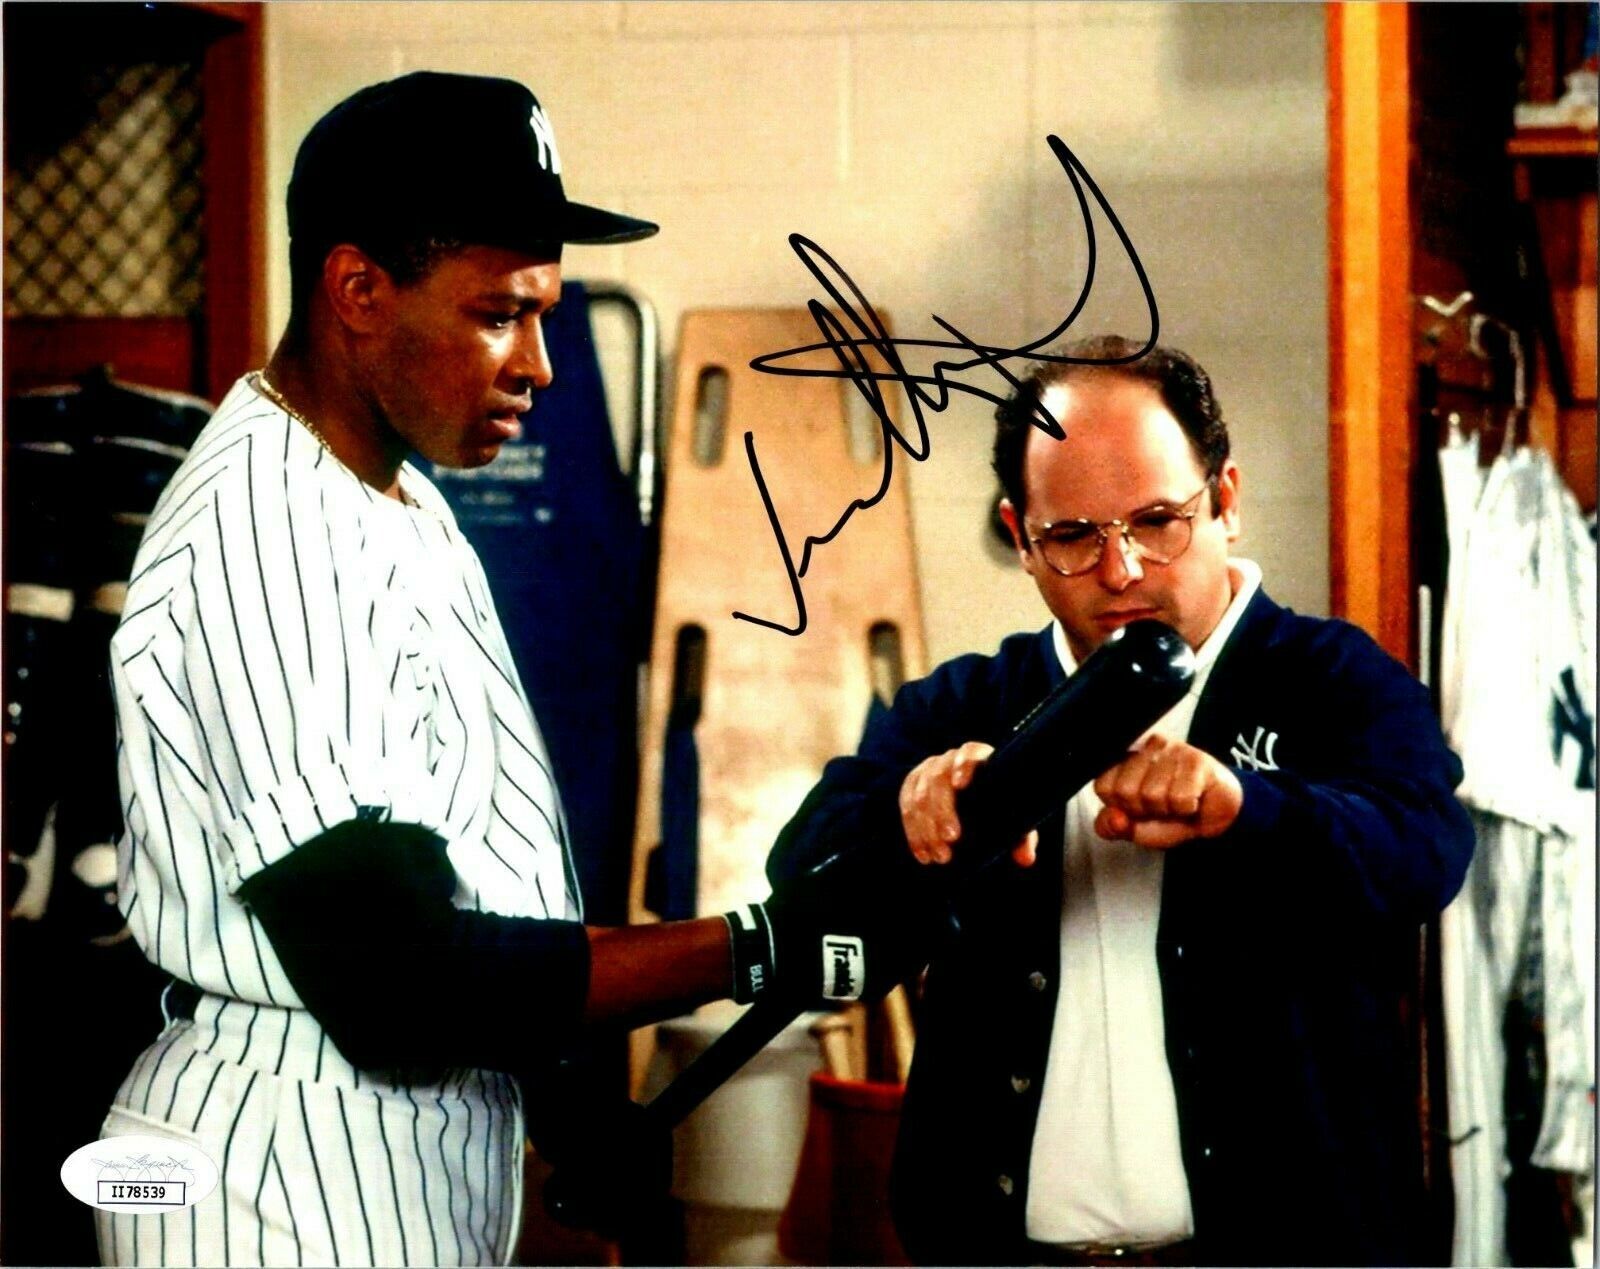 Jason Alexander New York Yankees Autographed 8x10 Color Photo B JSA COA II78539